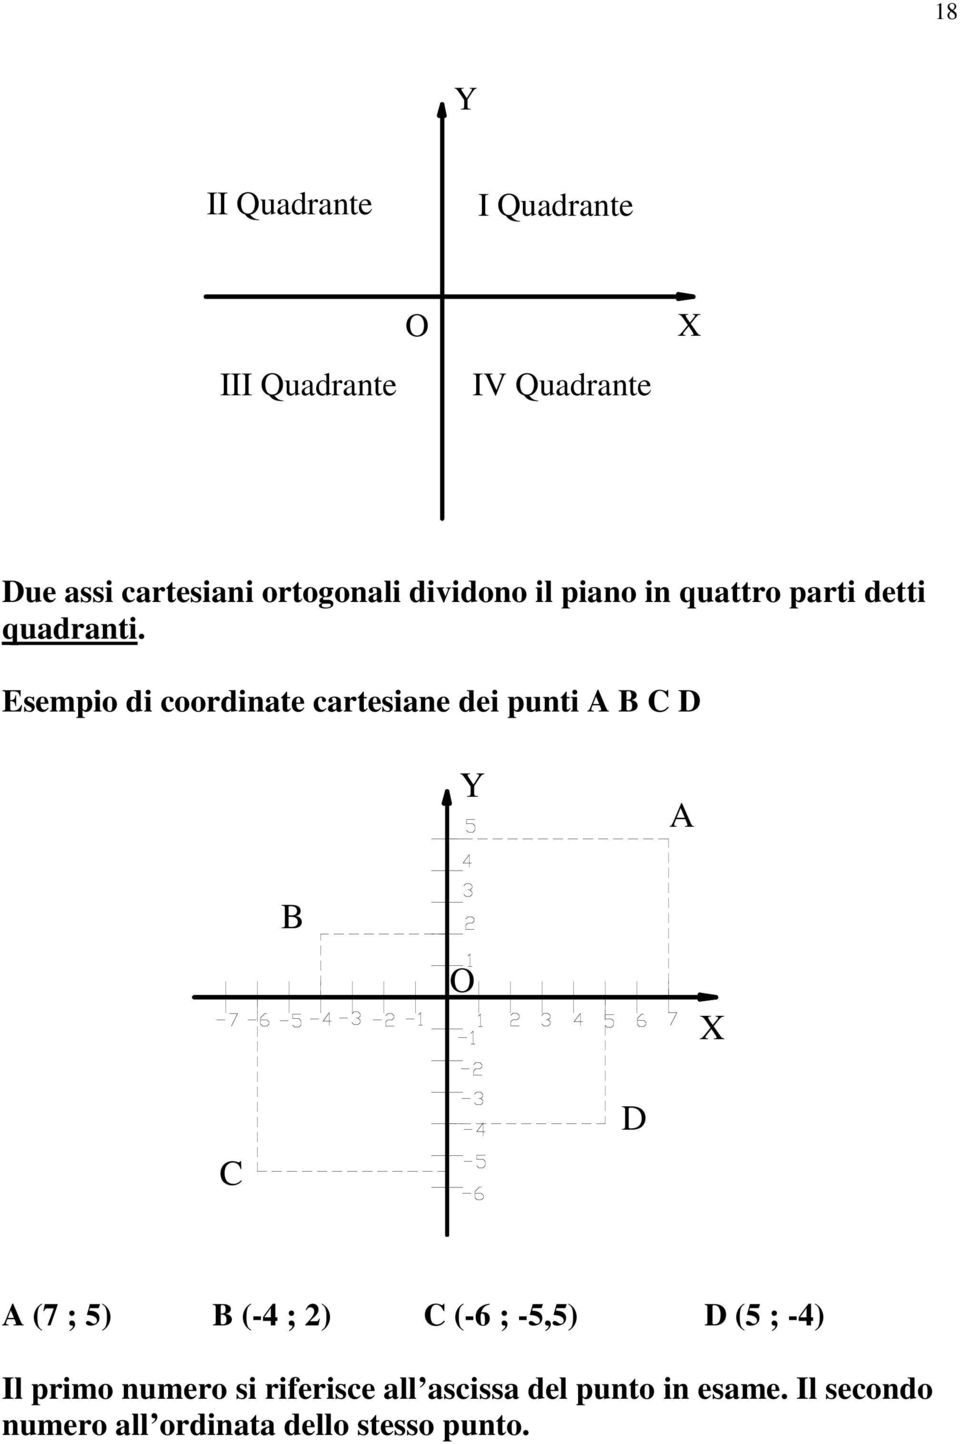 Esempio di coordinate cartesiane dei punti D Y X D (7 ; 5) (-4 ; 2) (-6 ; -5,5) D (5